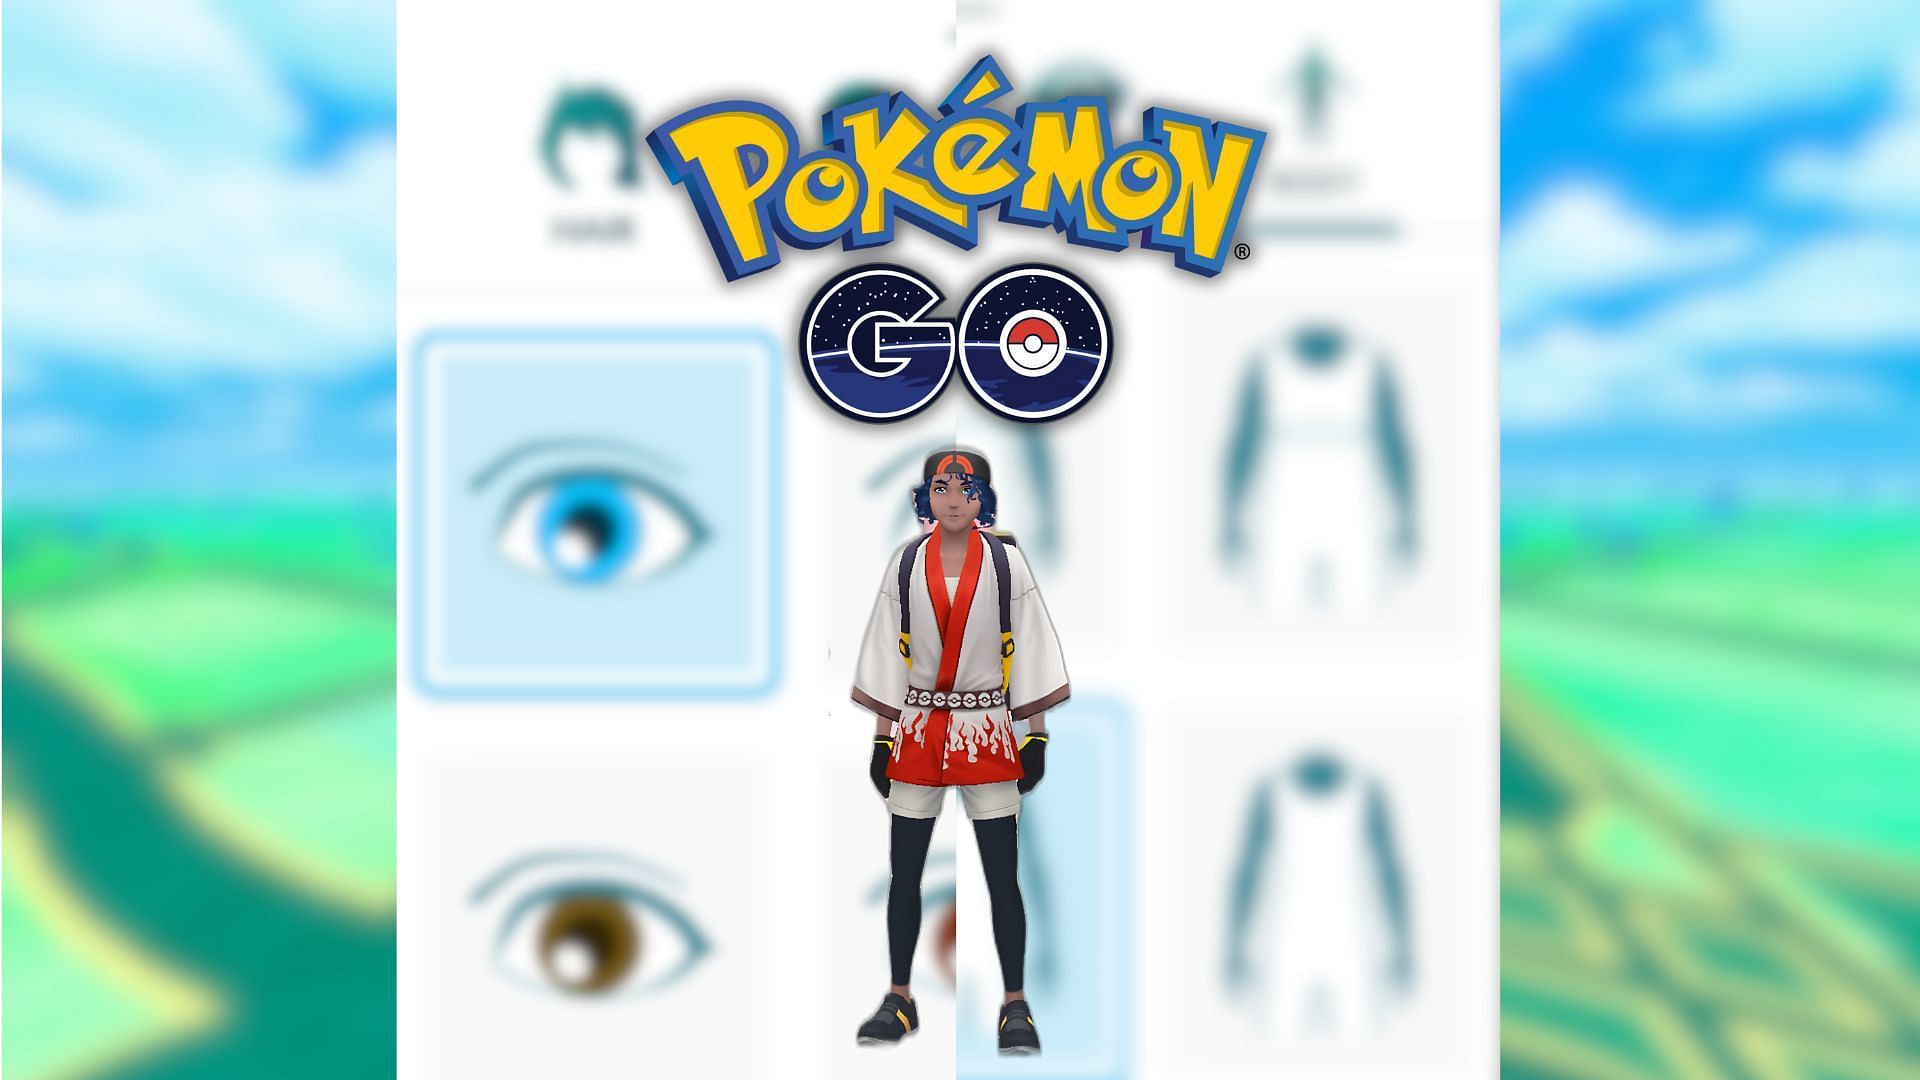 Pokemon go Avater customizations (Image via The Pokemon Company)